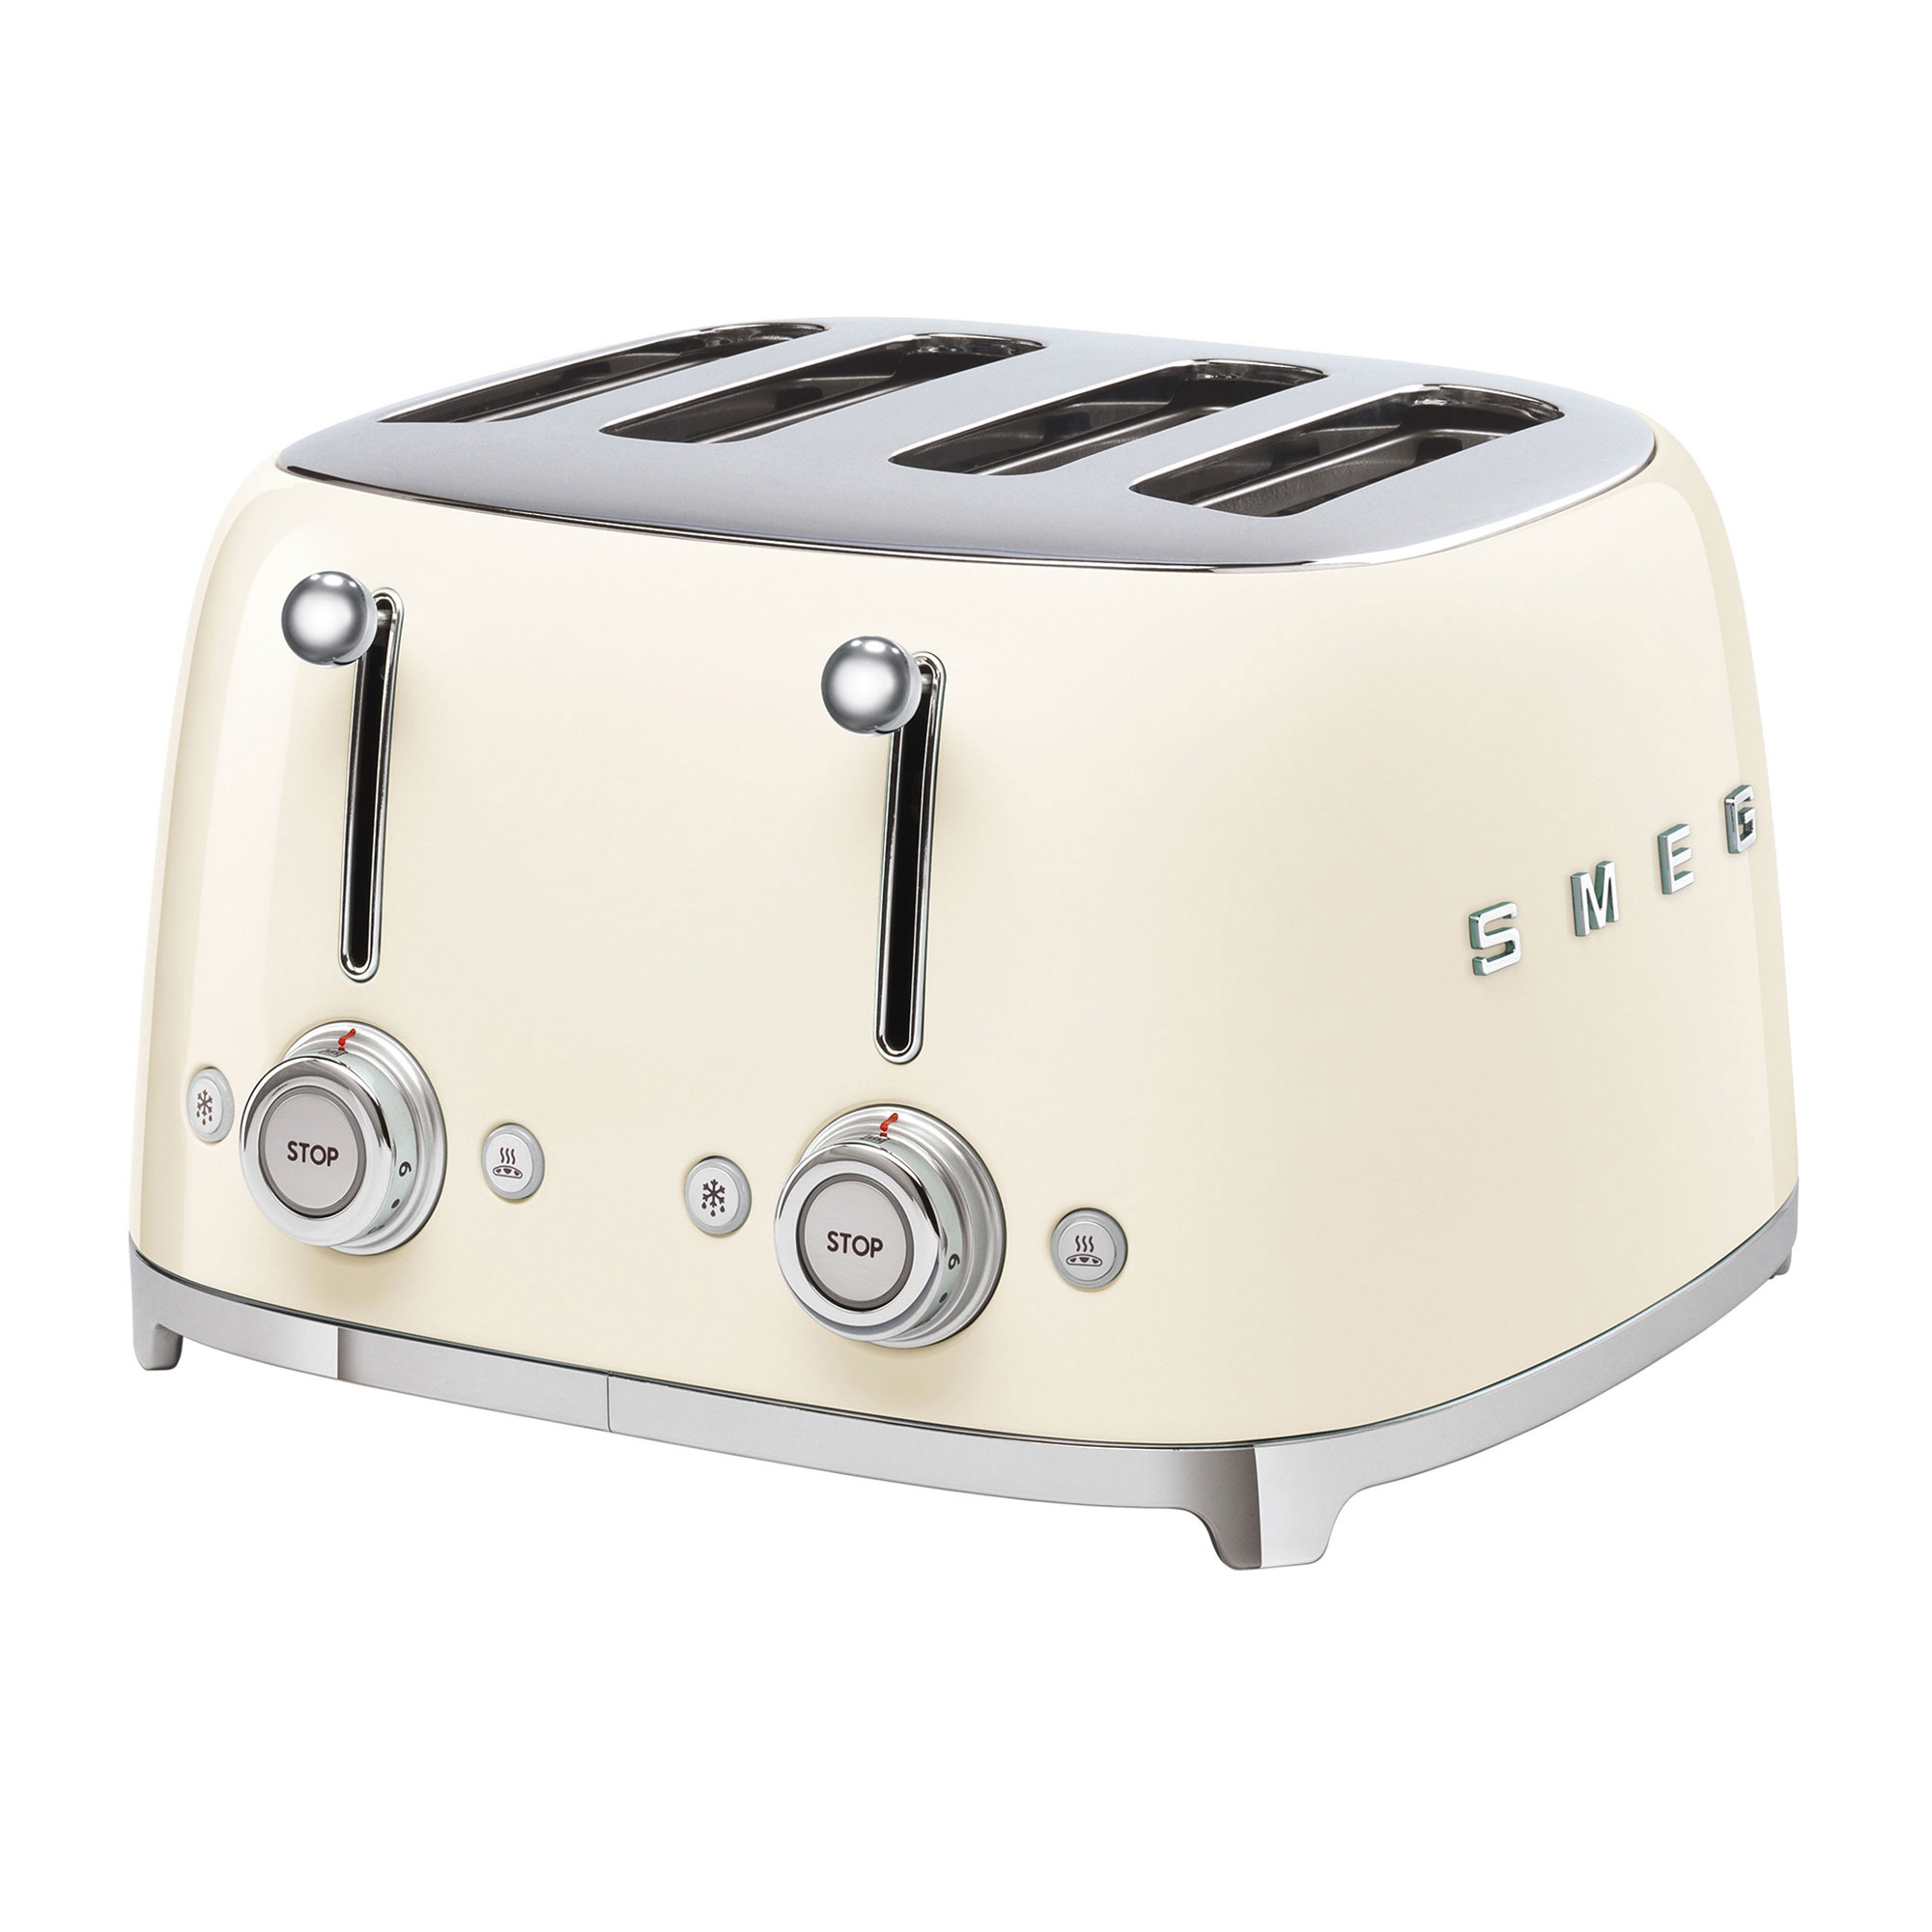 Smeg 50's Retro Style 4 Slot Toaster Cream Image 1